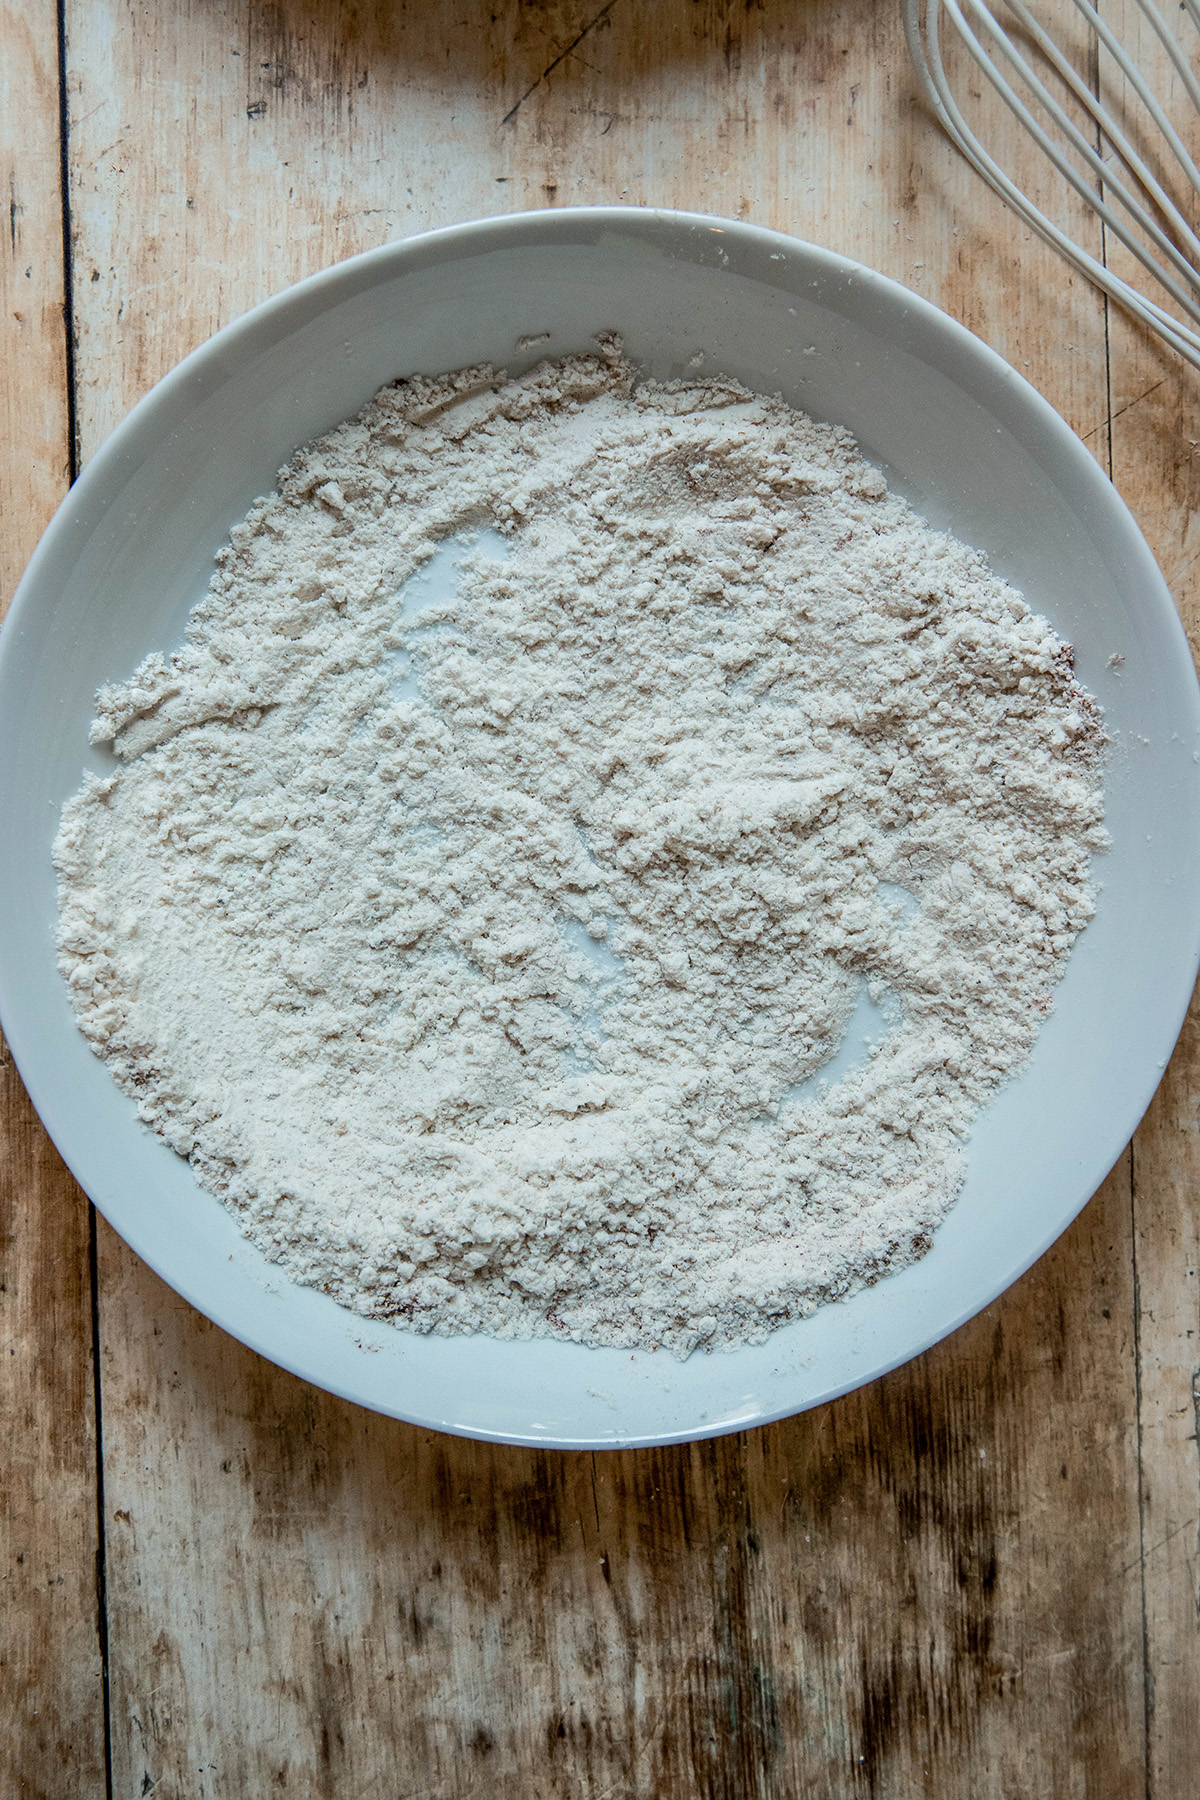 flour mixture on a plate